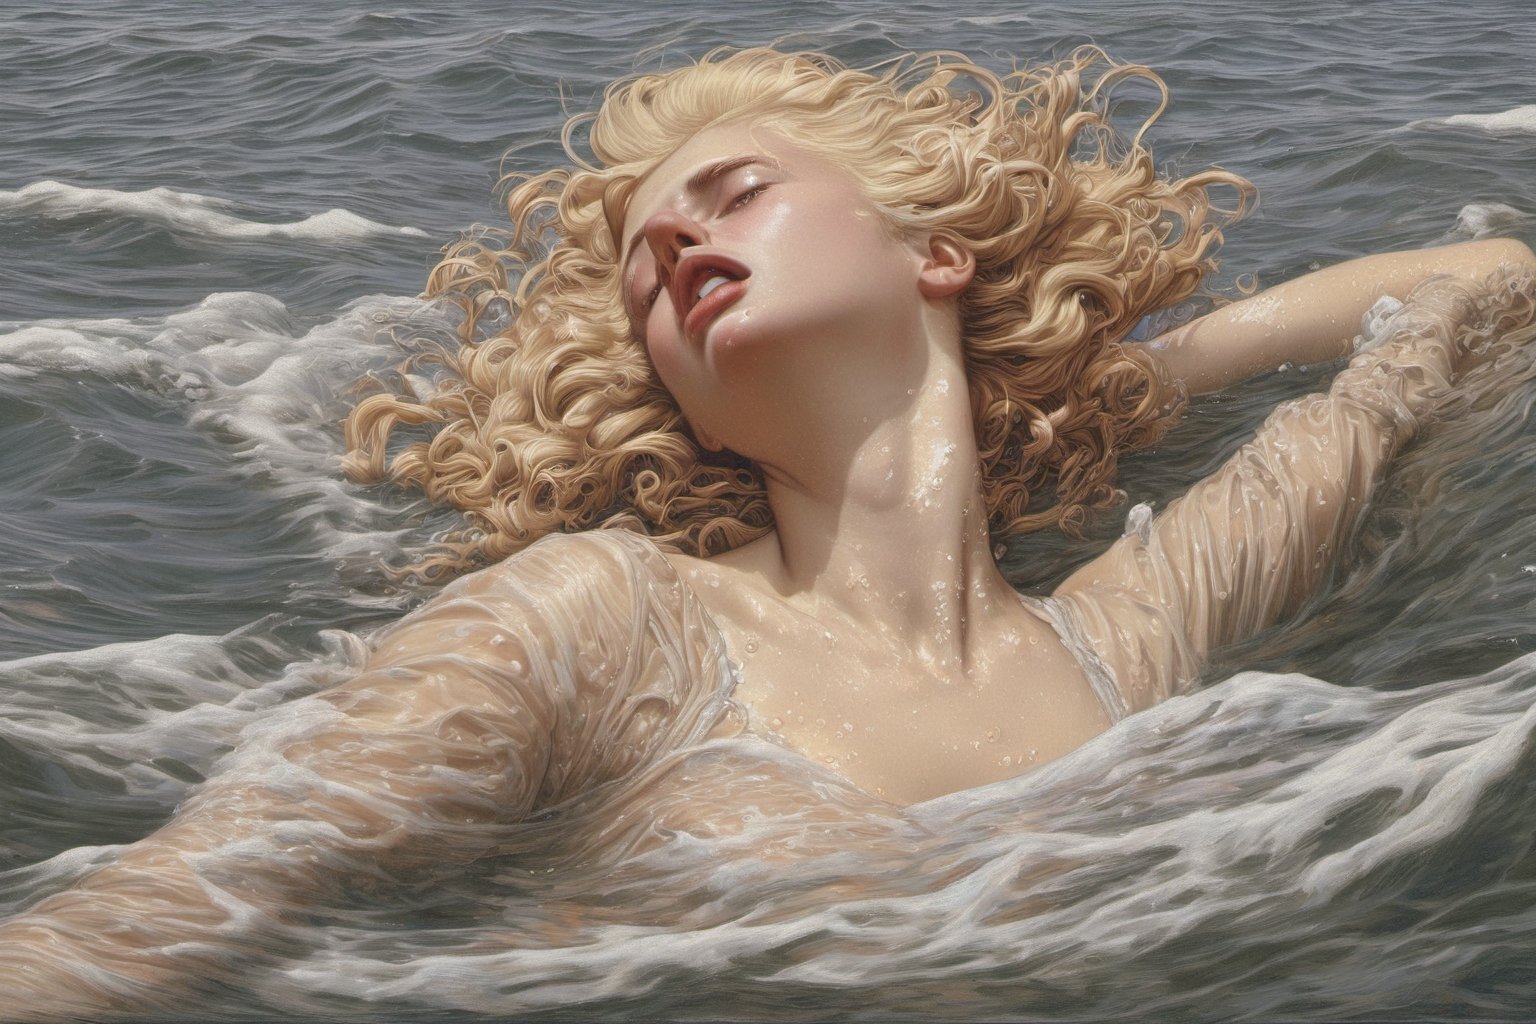 "A blonde woman drowning in a sea, canon_5d_mark_4, elaborate_detail, art by J.C. Leyendecker